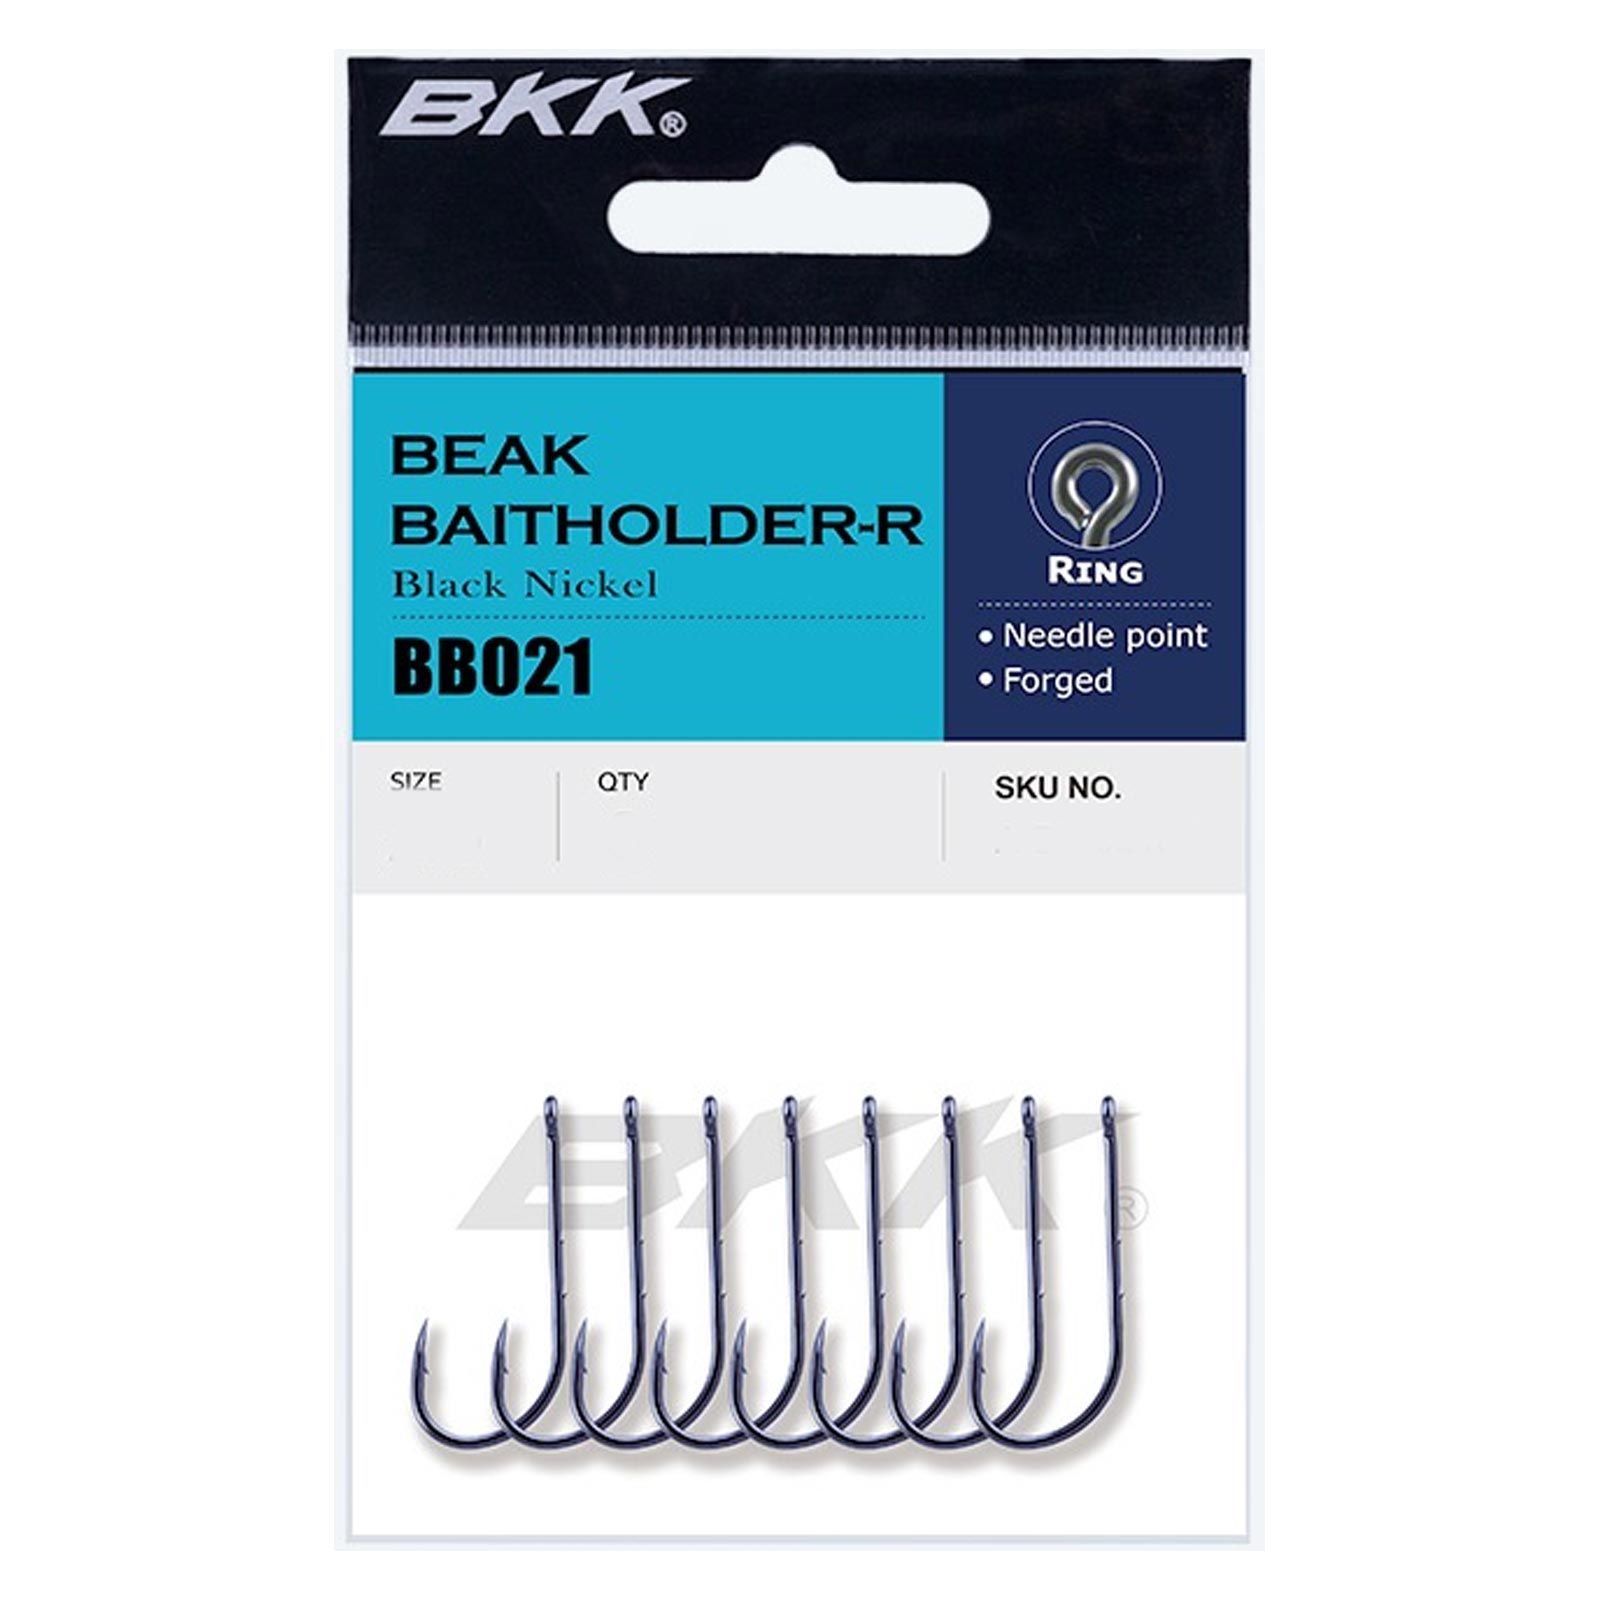 BKK Beak Baitholder-R Einzelhaken für Aal